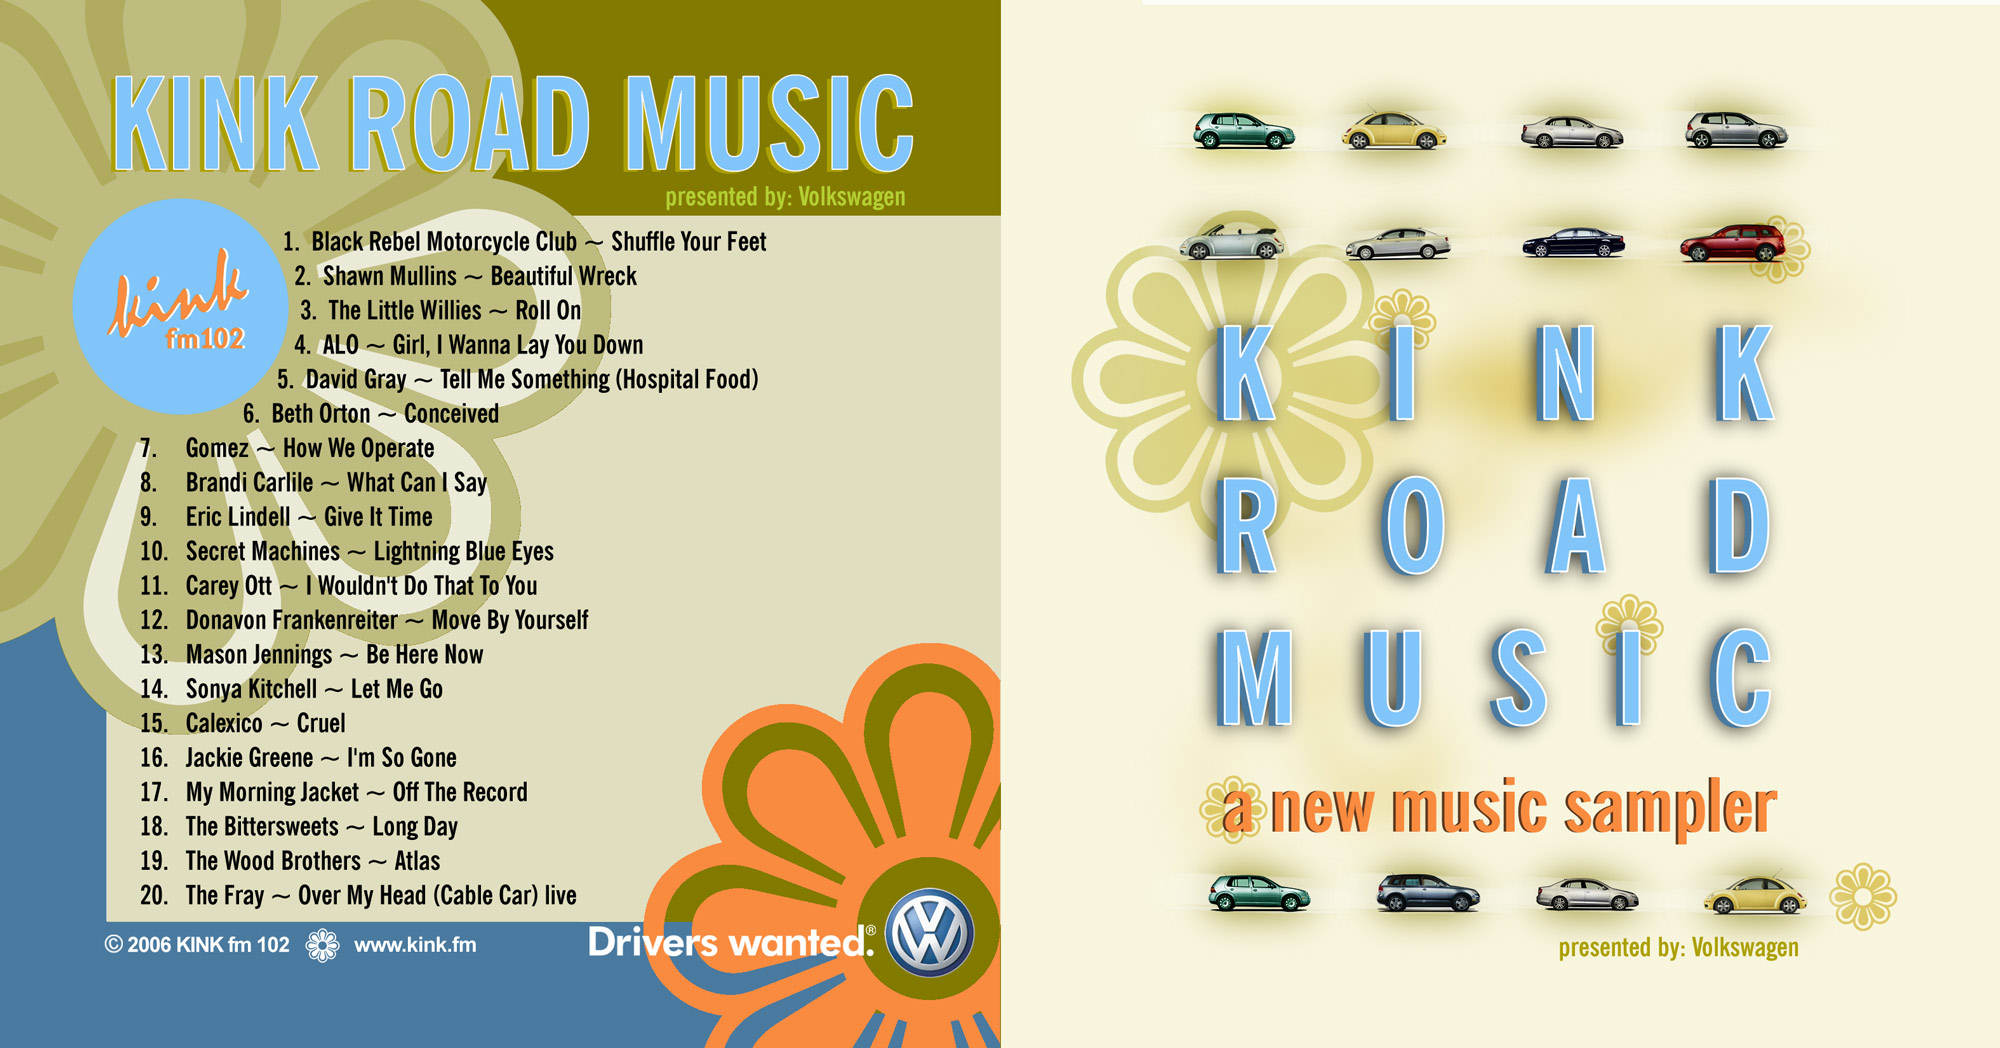 kink.fm road music sponsored by VW  